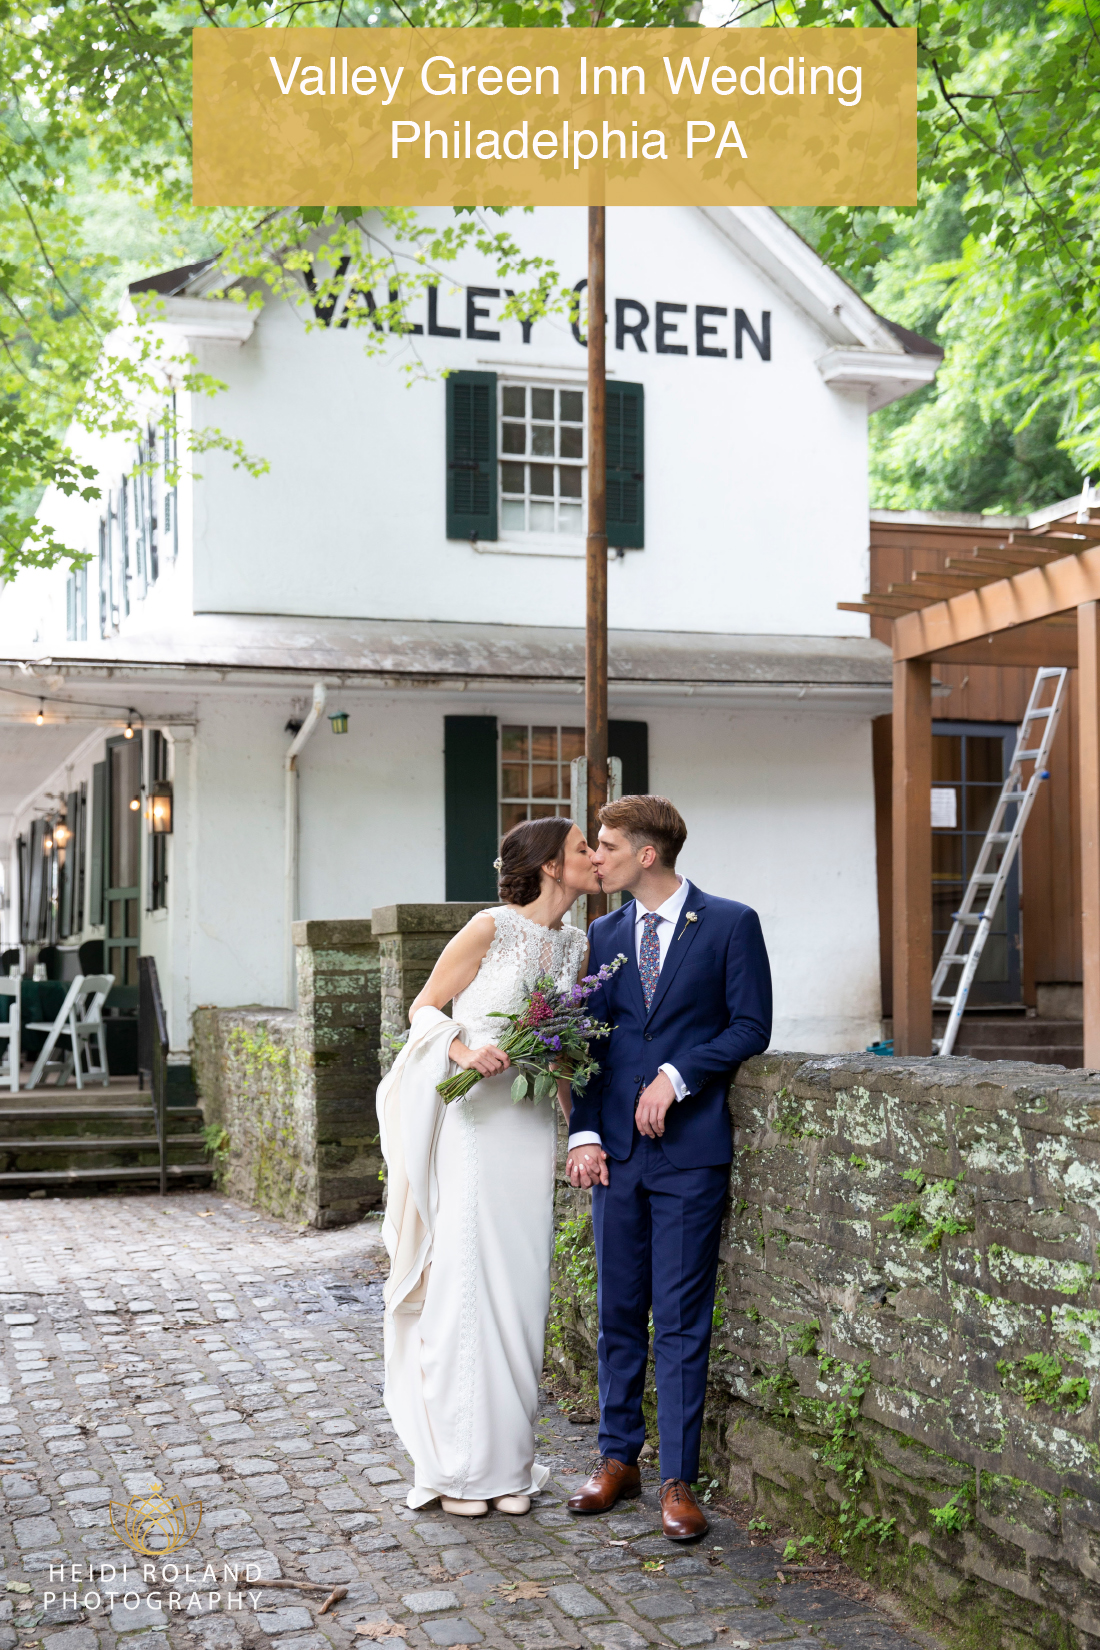 Valley Green Inn Wedding Philadelphia PA 